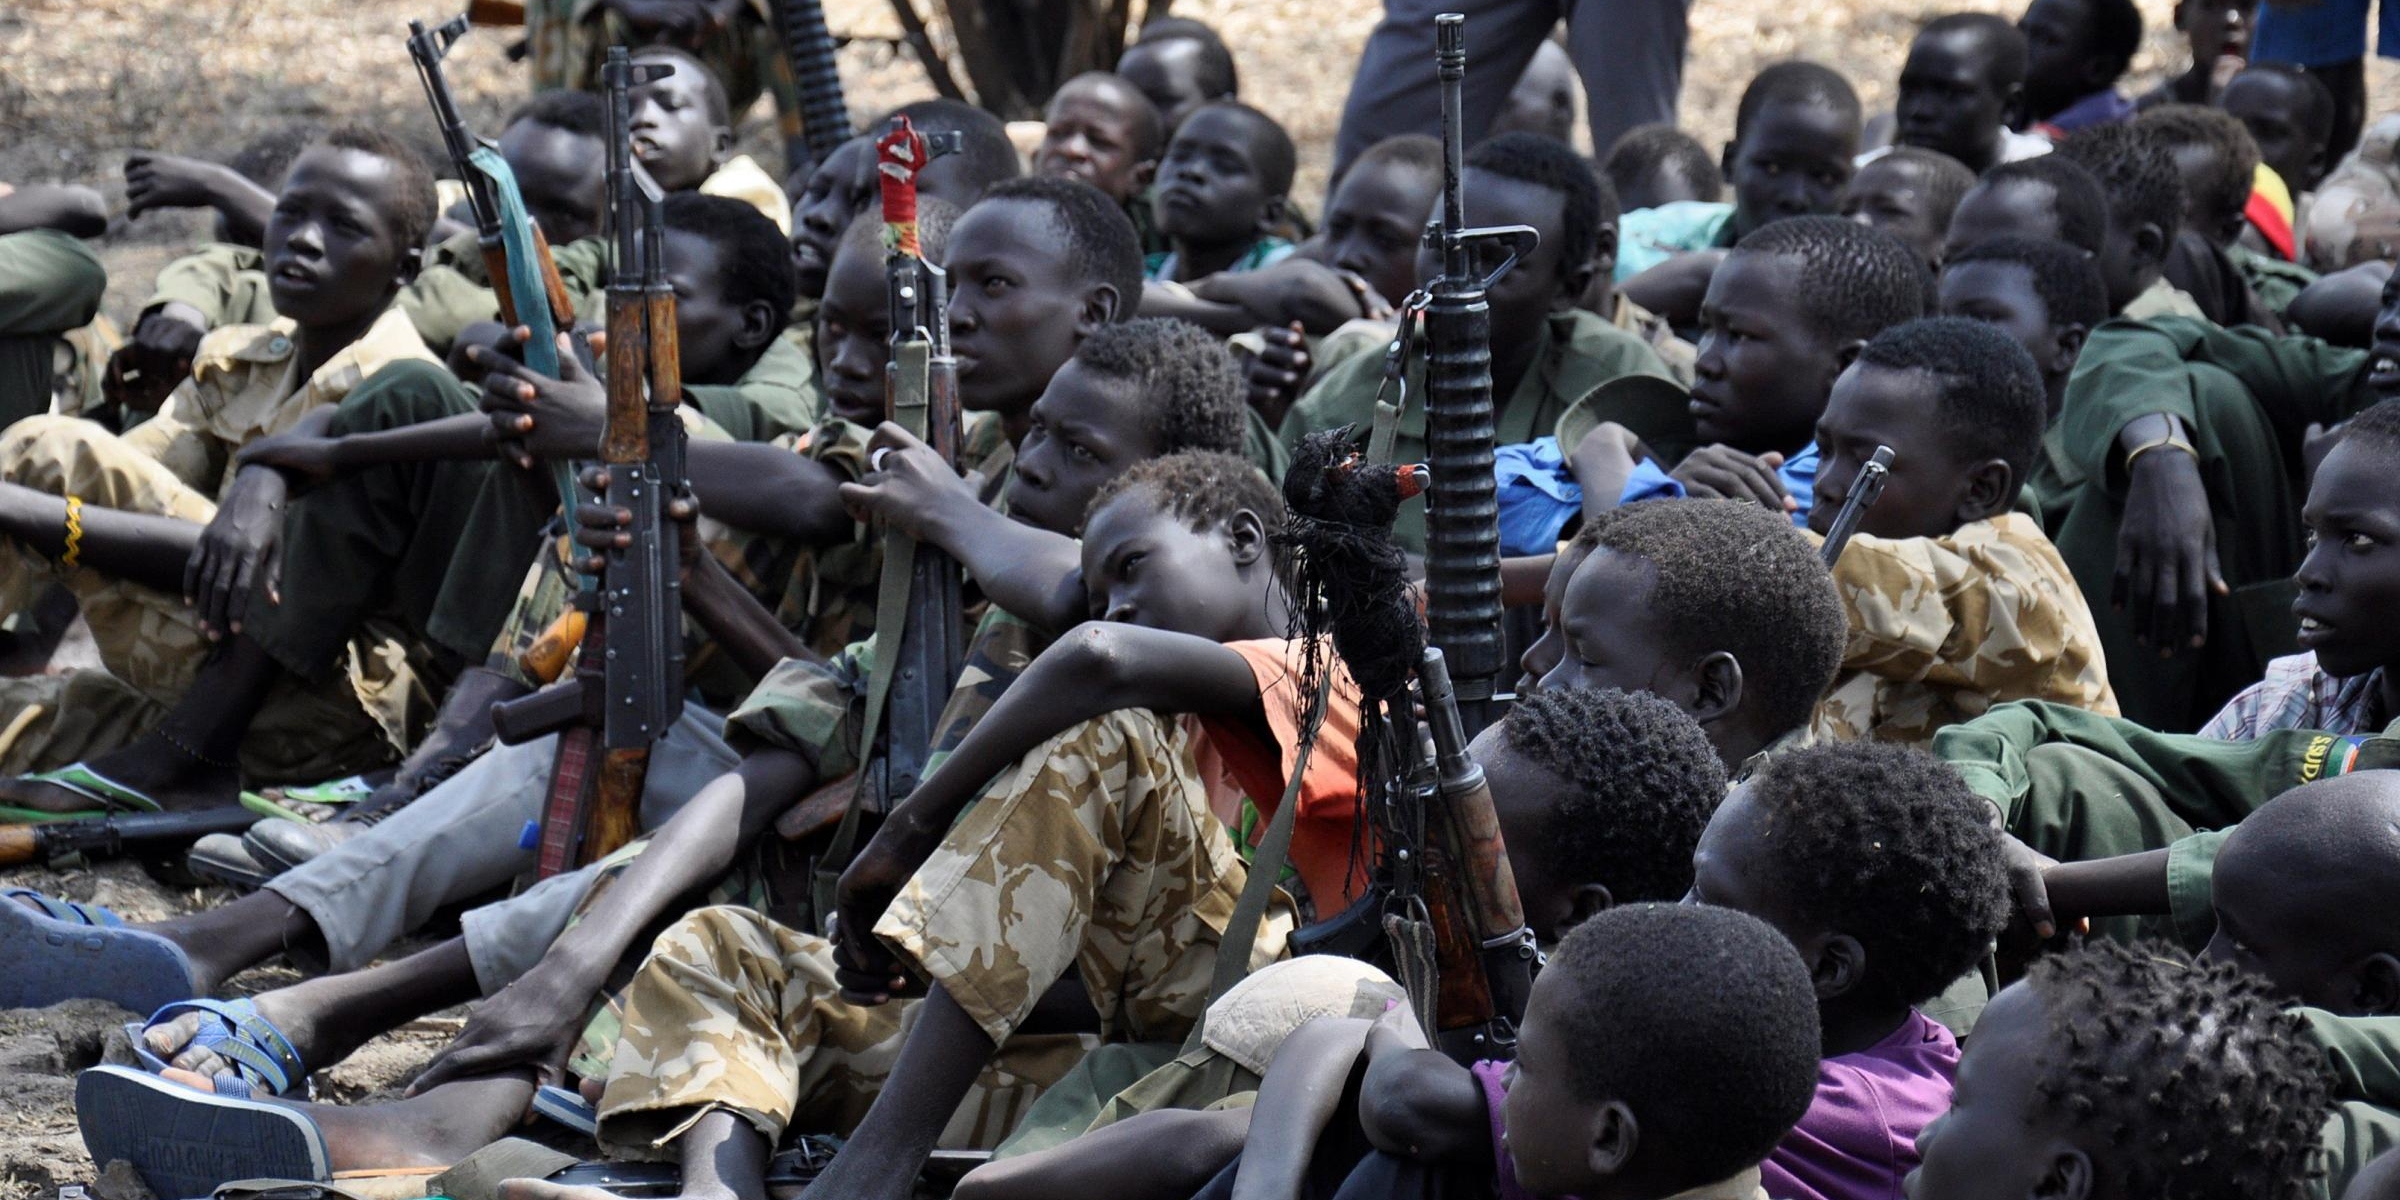 Bambini soldato liberati in Sud Sudan nel 2015 (Anadolu Agency Photo: Samir Bol )